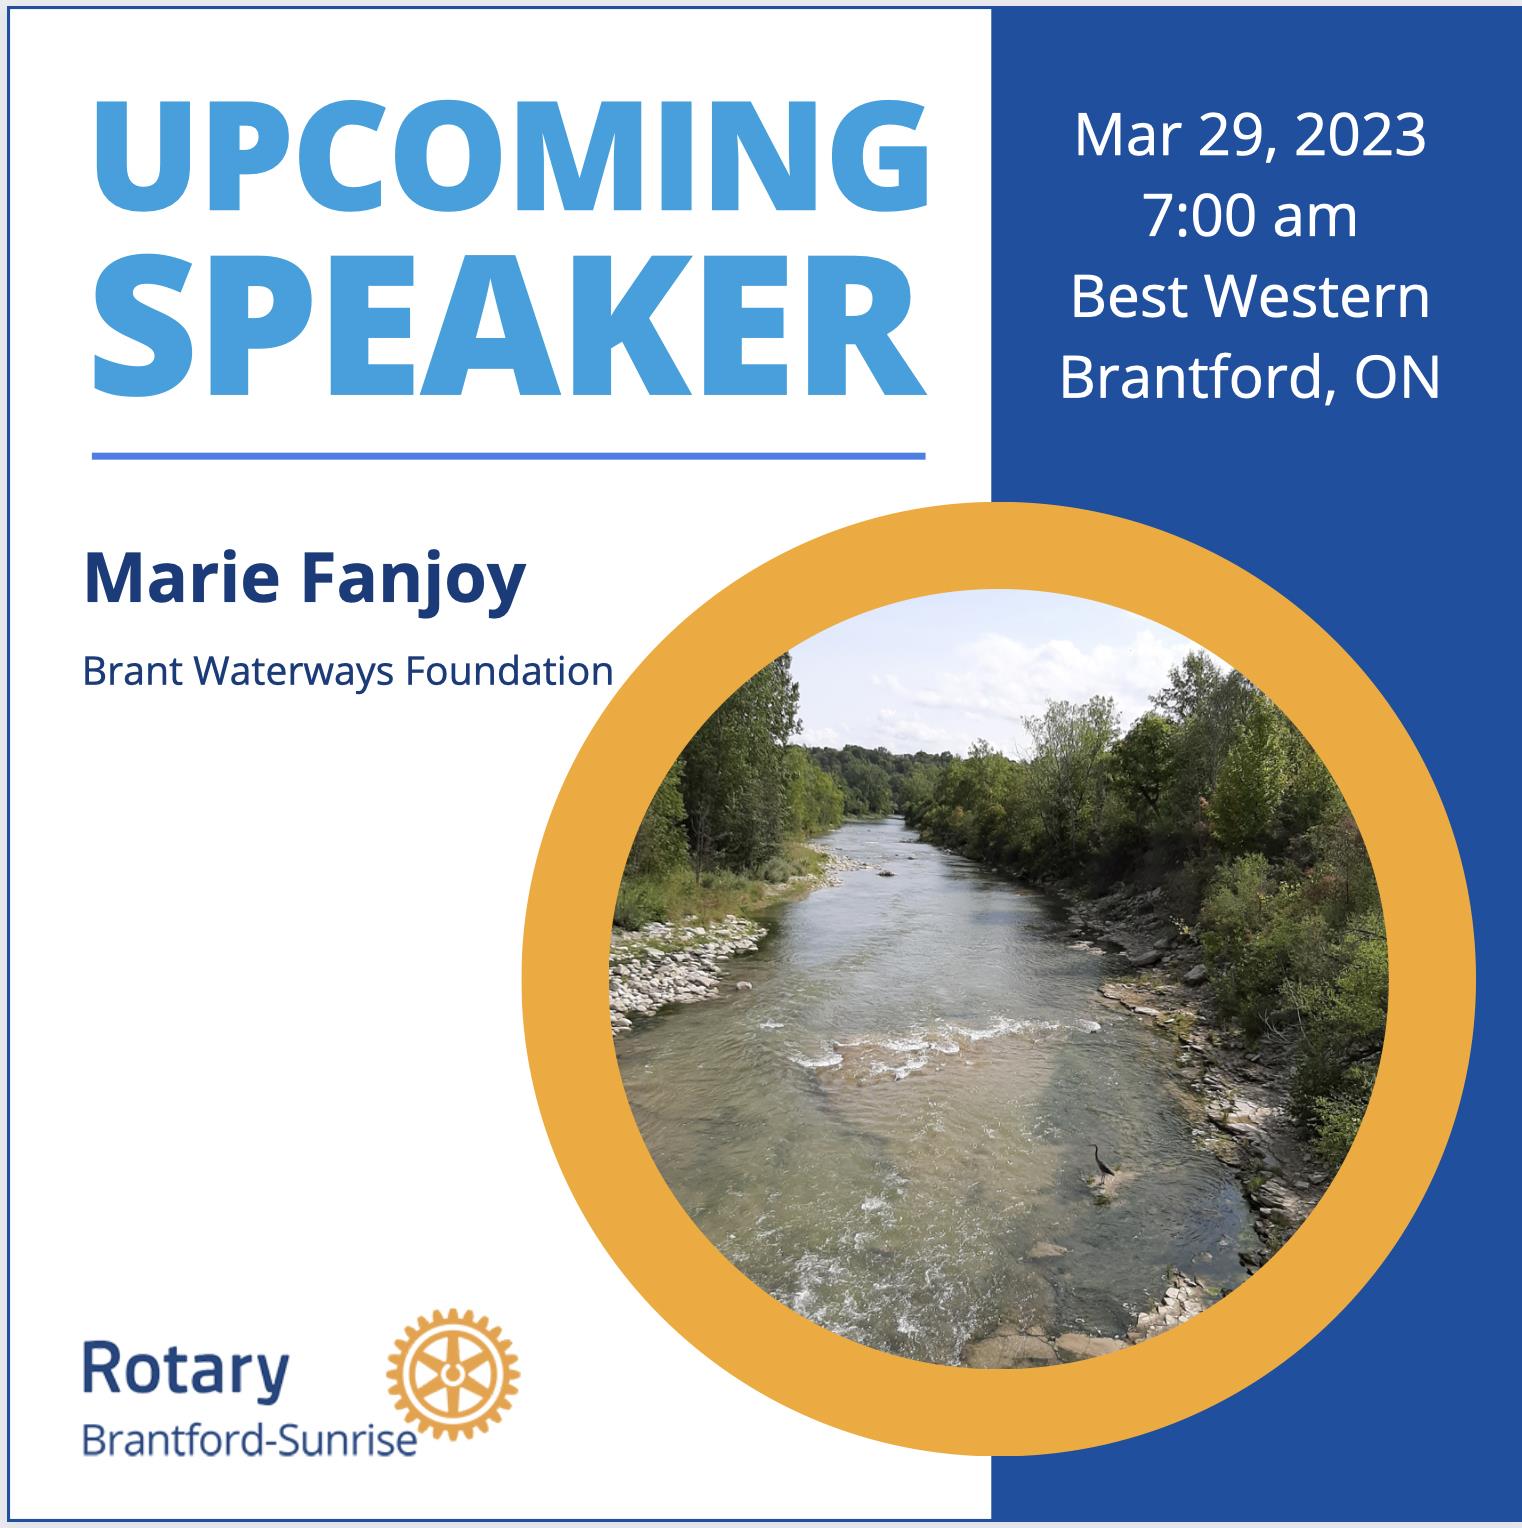 Marie Fanjoy - Brant Waterways Foundation